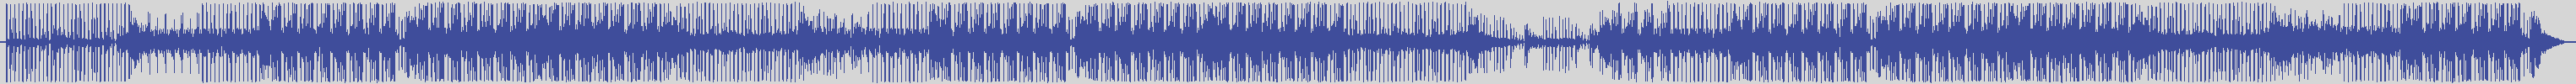 nf_boyz_records [NFY028] Chrys, Ler - Deeper [Deep Electric Mix] audio wave form